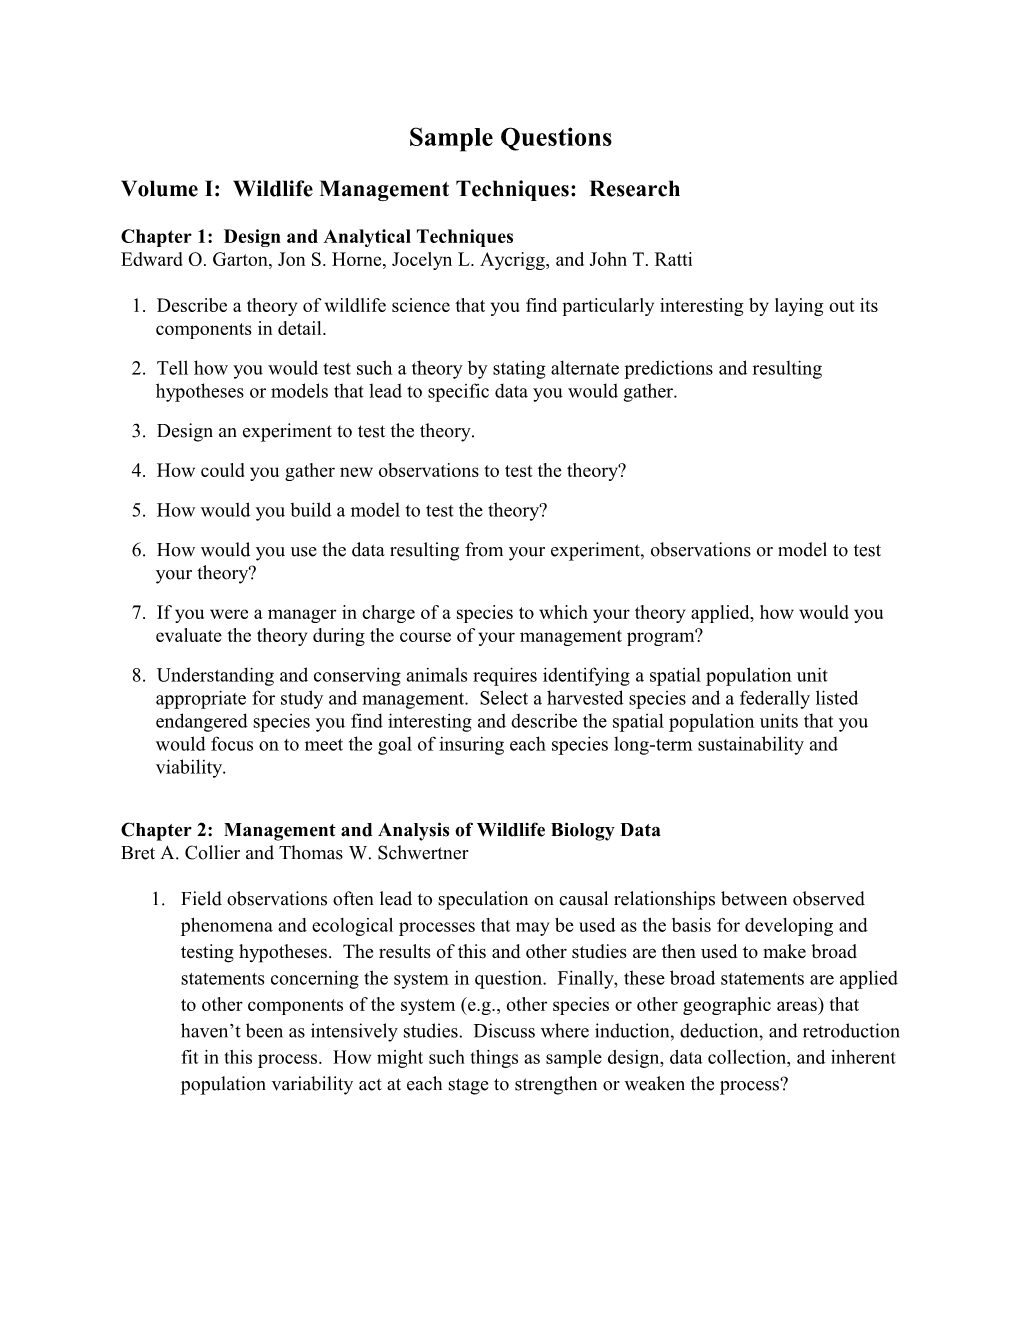 Volume I: Wildlife Management Techniques: Research